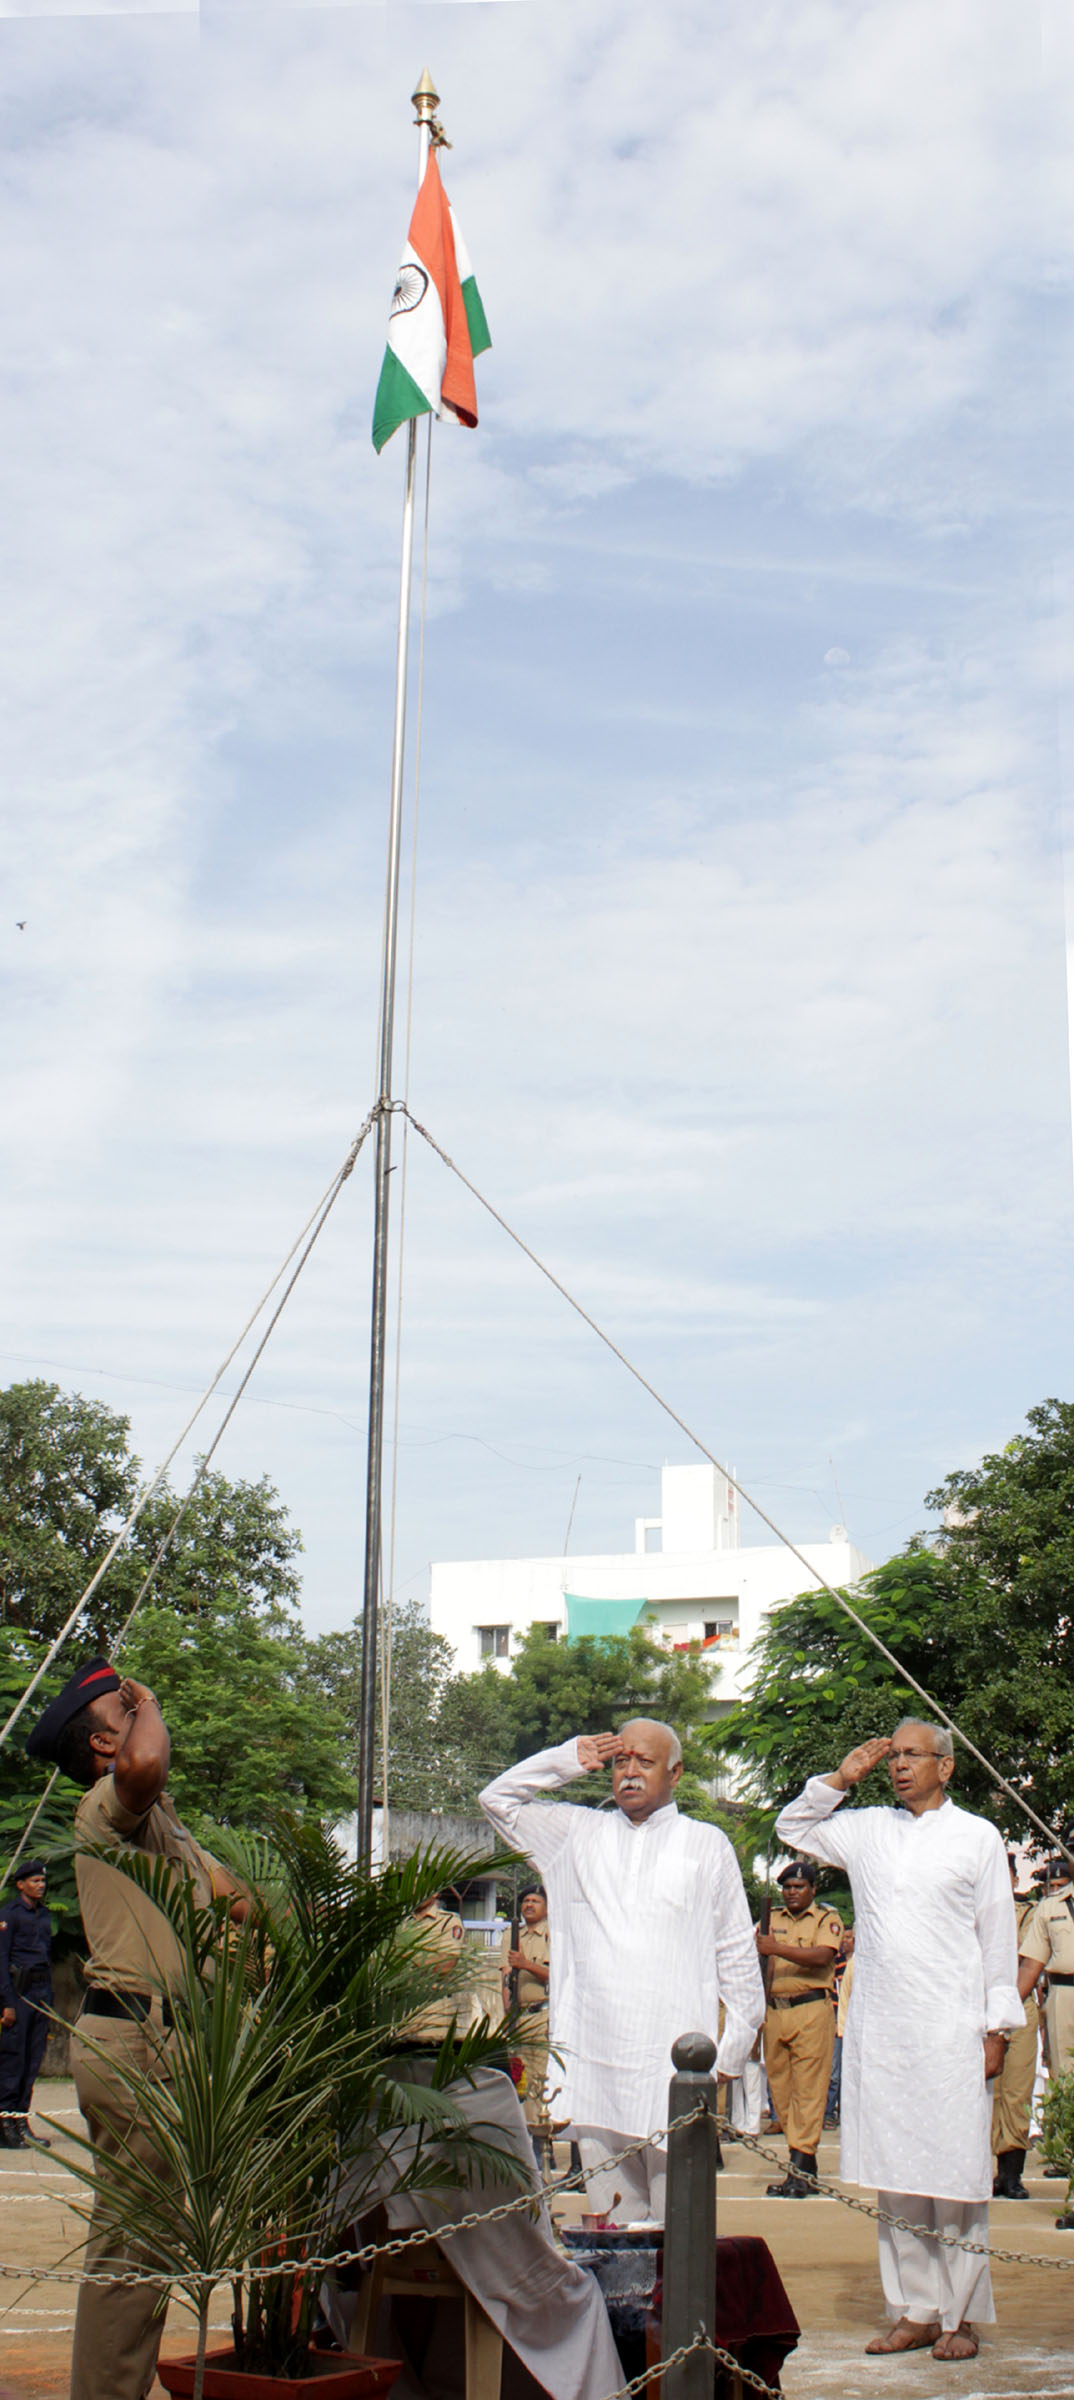  RSS Sarasanghachalak Dr Mohan Bhagwat hoisted National Flag at Dr Hedgewar Bhavan, Mahal, Nagpur today morning 